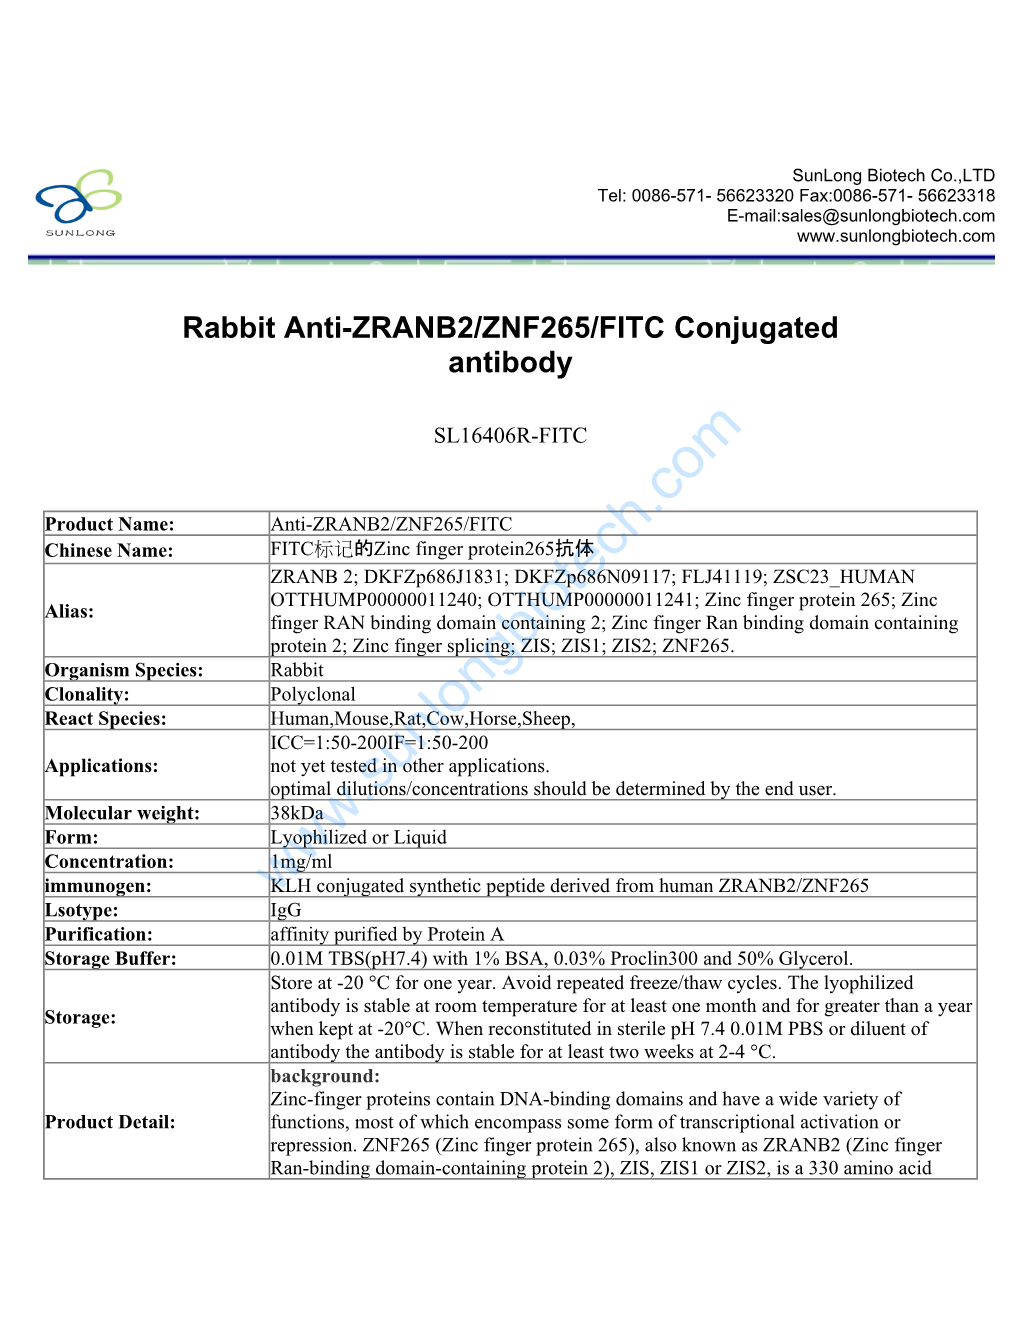 Rabbit Anti-ZRANB2/ZNF265/FITC Conjugated Antibody